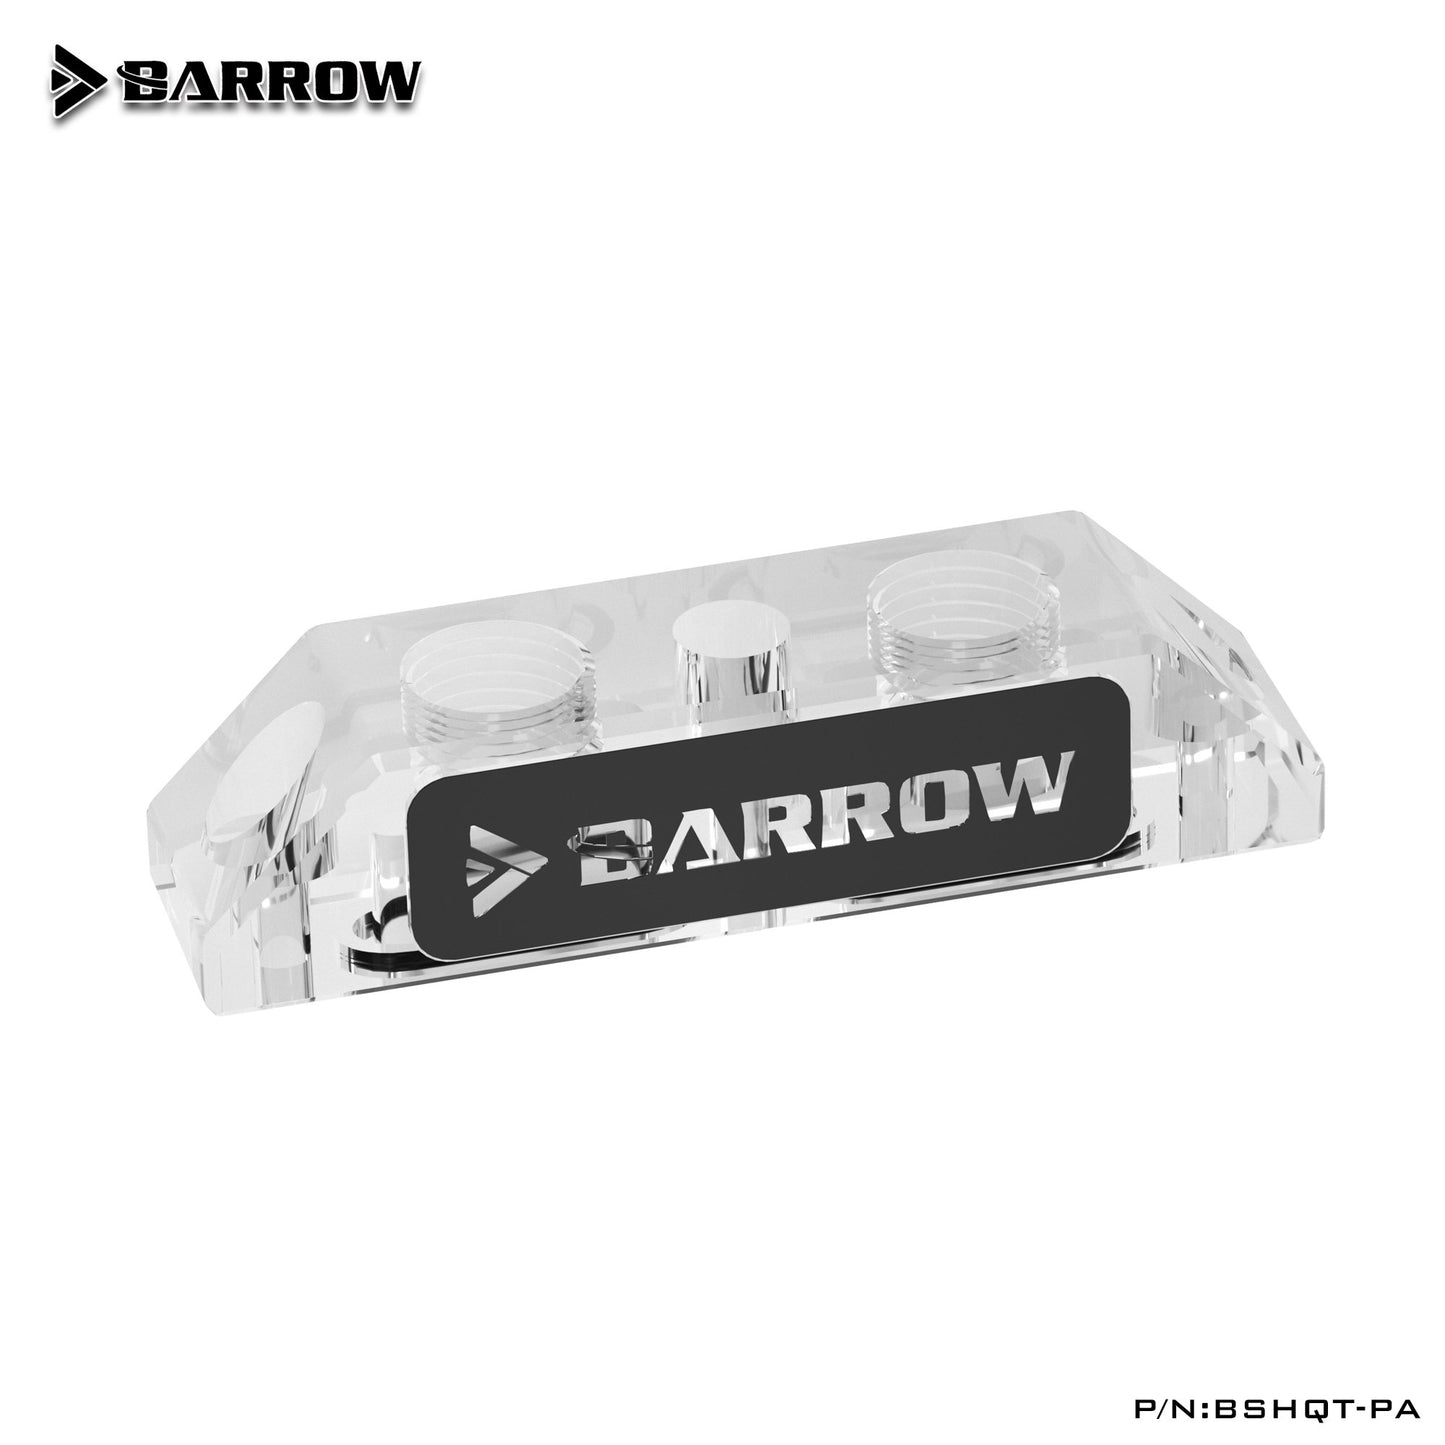 Barrow BSHQT-PA, Multifunctional Acrylic Change Direction Top-Side GPU Block Bridge, For Barrow's GPU Water Block Refit